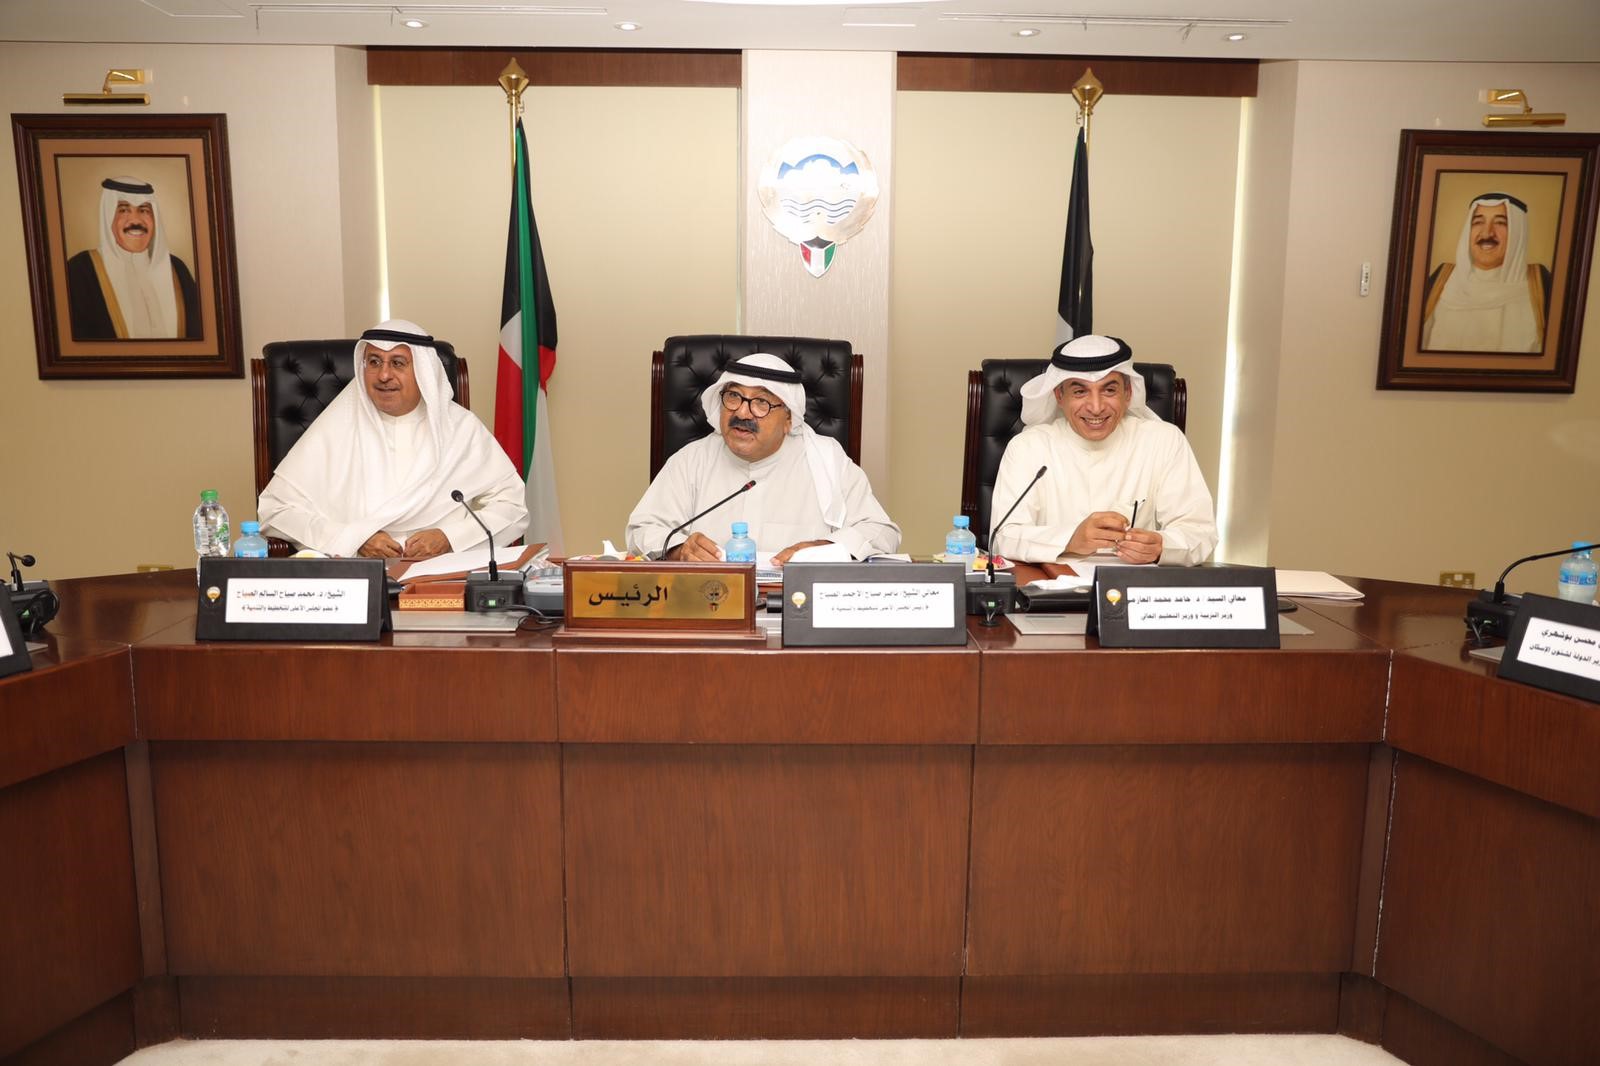 Sheikh Nasser Sabah Al-Ahmad Al-Sabah chaired the 10th SCPD meeting